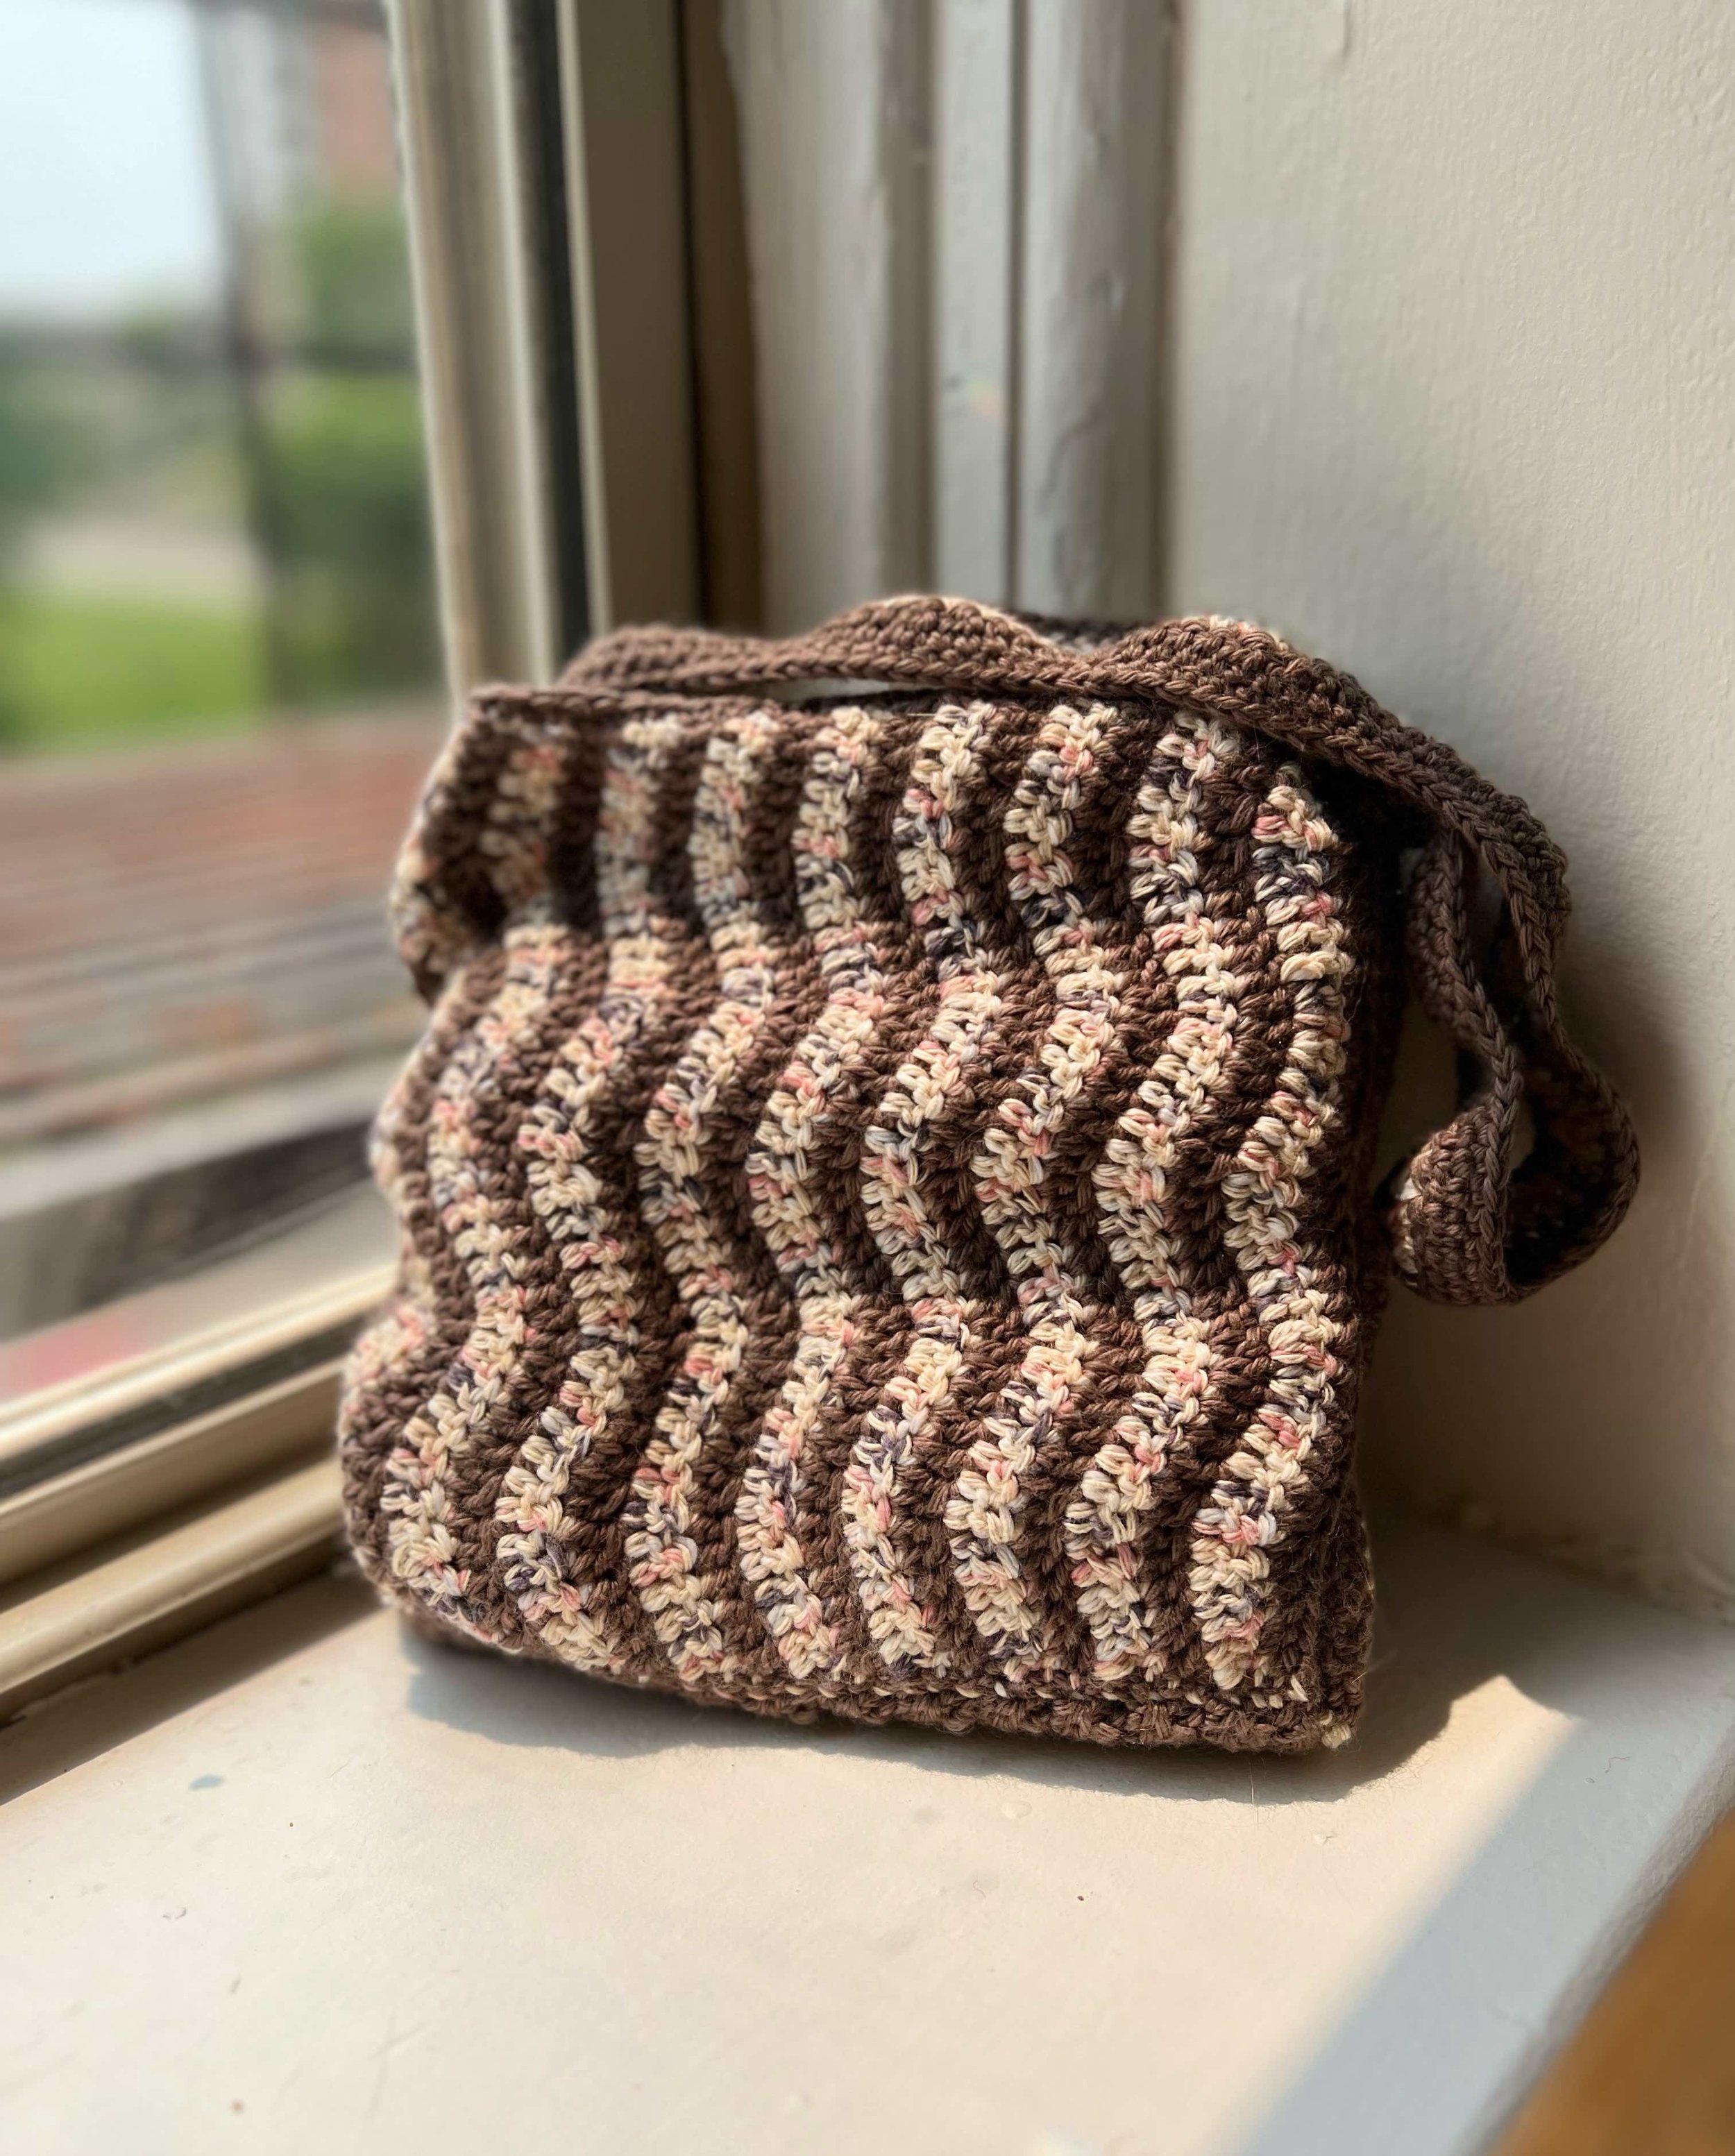 Super Easy Crochet Bag (Free Pattern!)